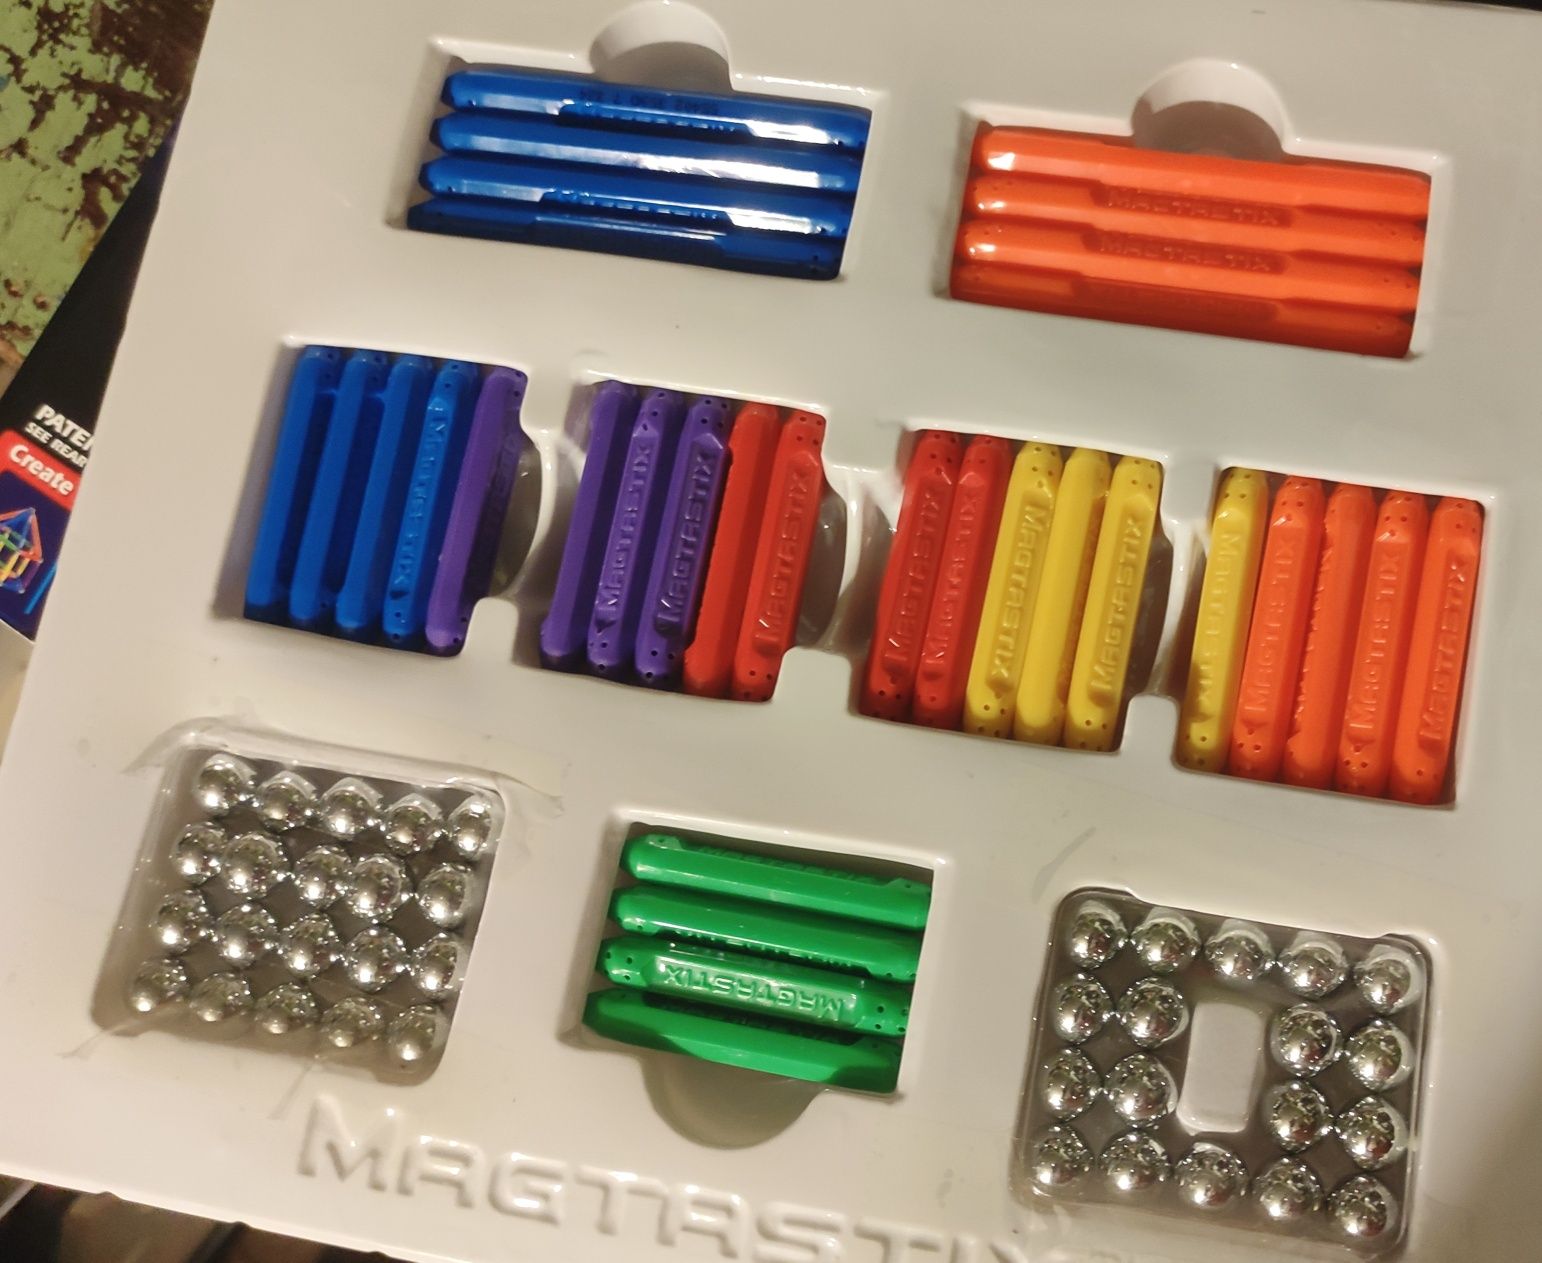 Cra-z-art magtastix magnesy opakowanie 70 części